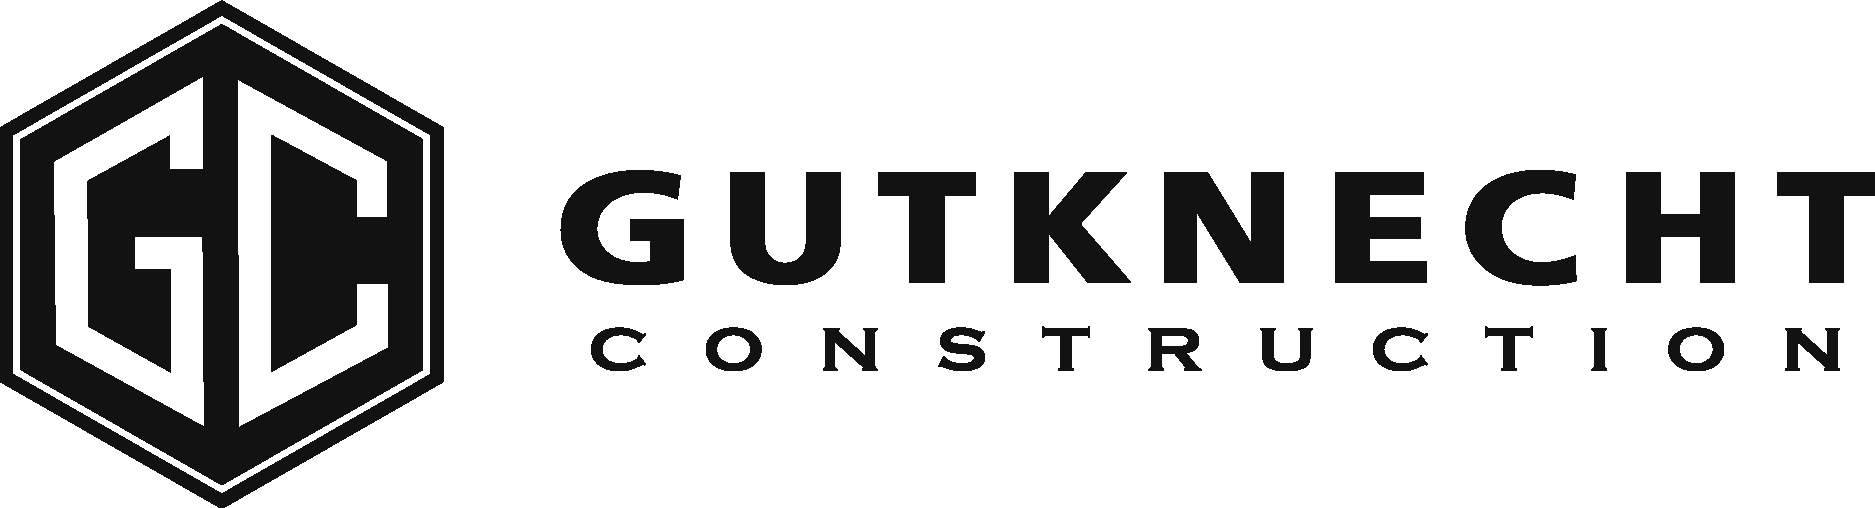 Gutknecht Construction Logo Vector